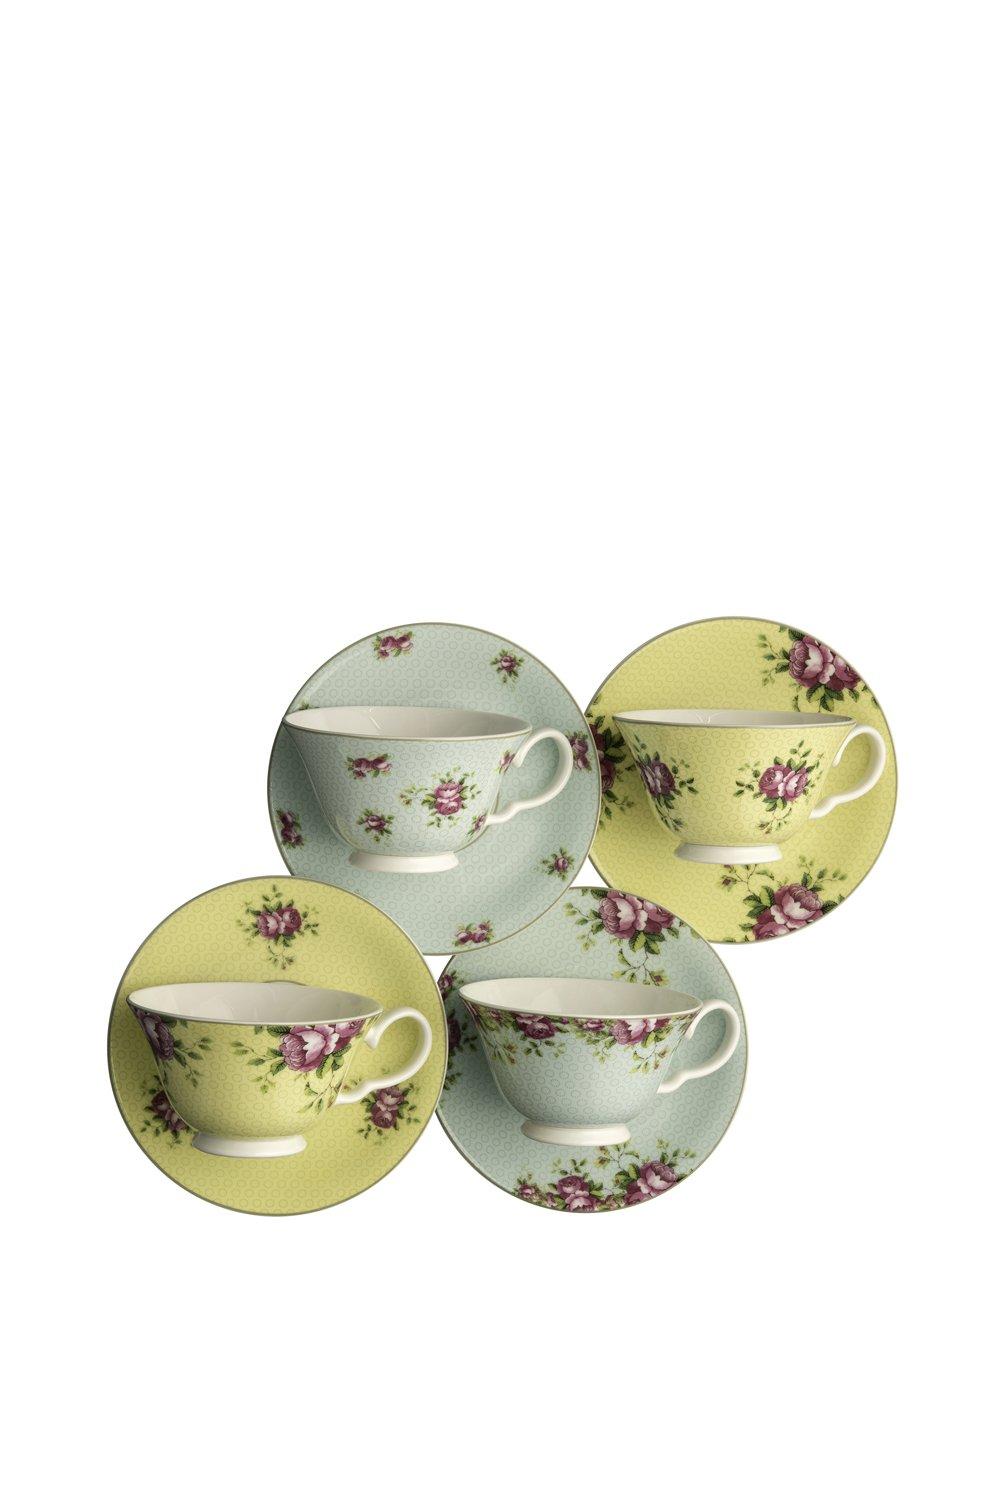 'Archive Rose' Teacups & Saucers Set